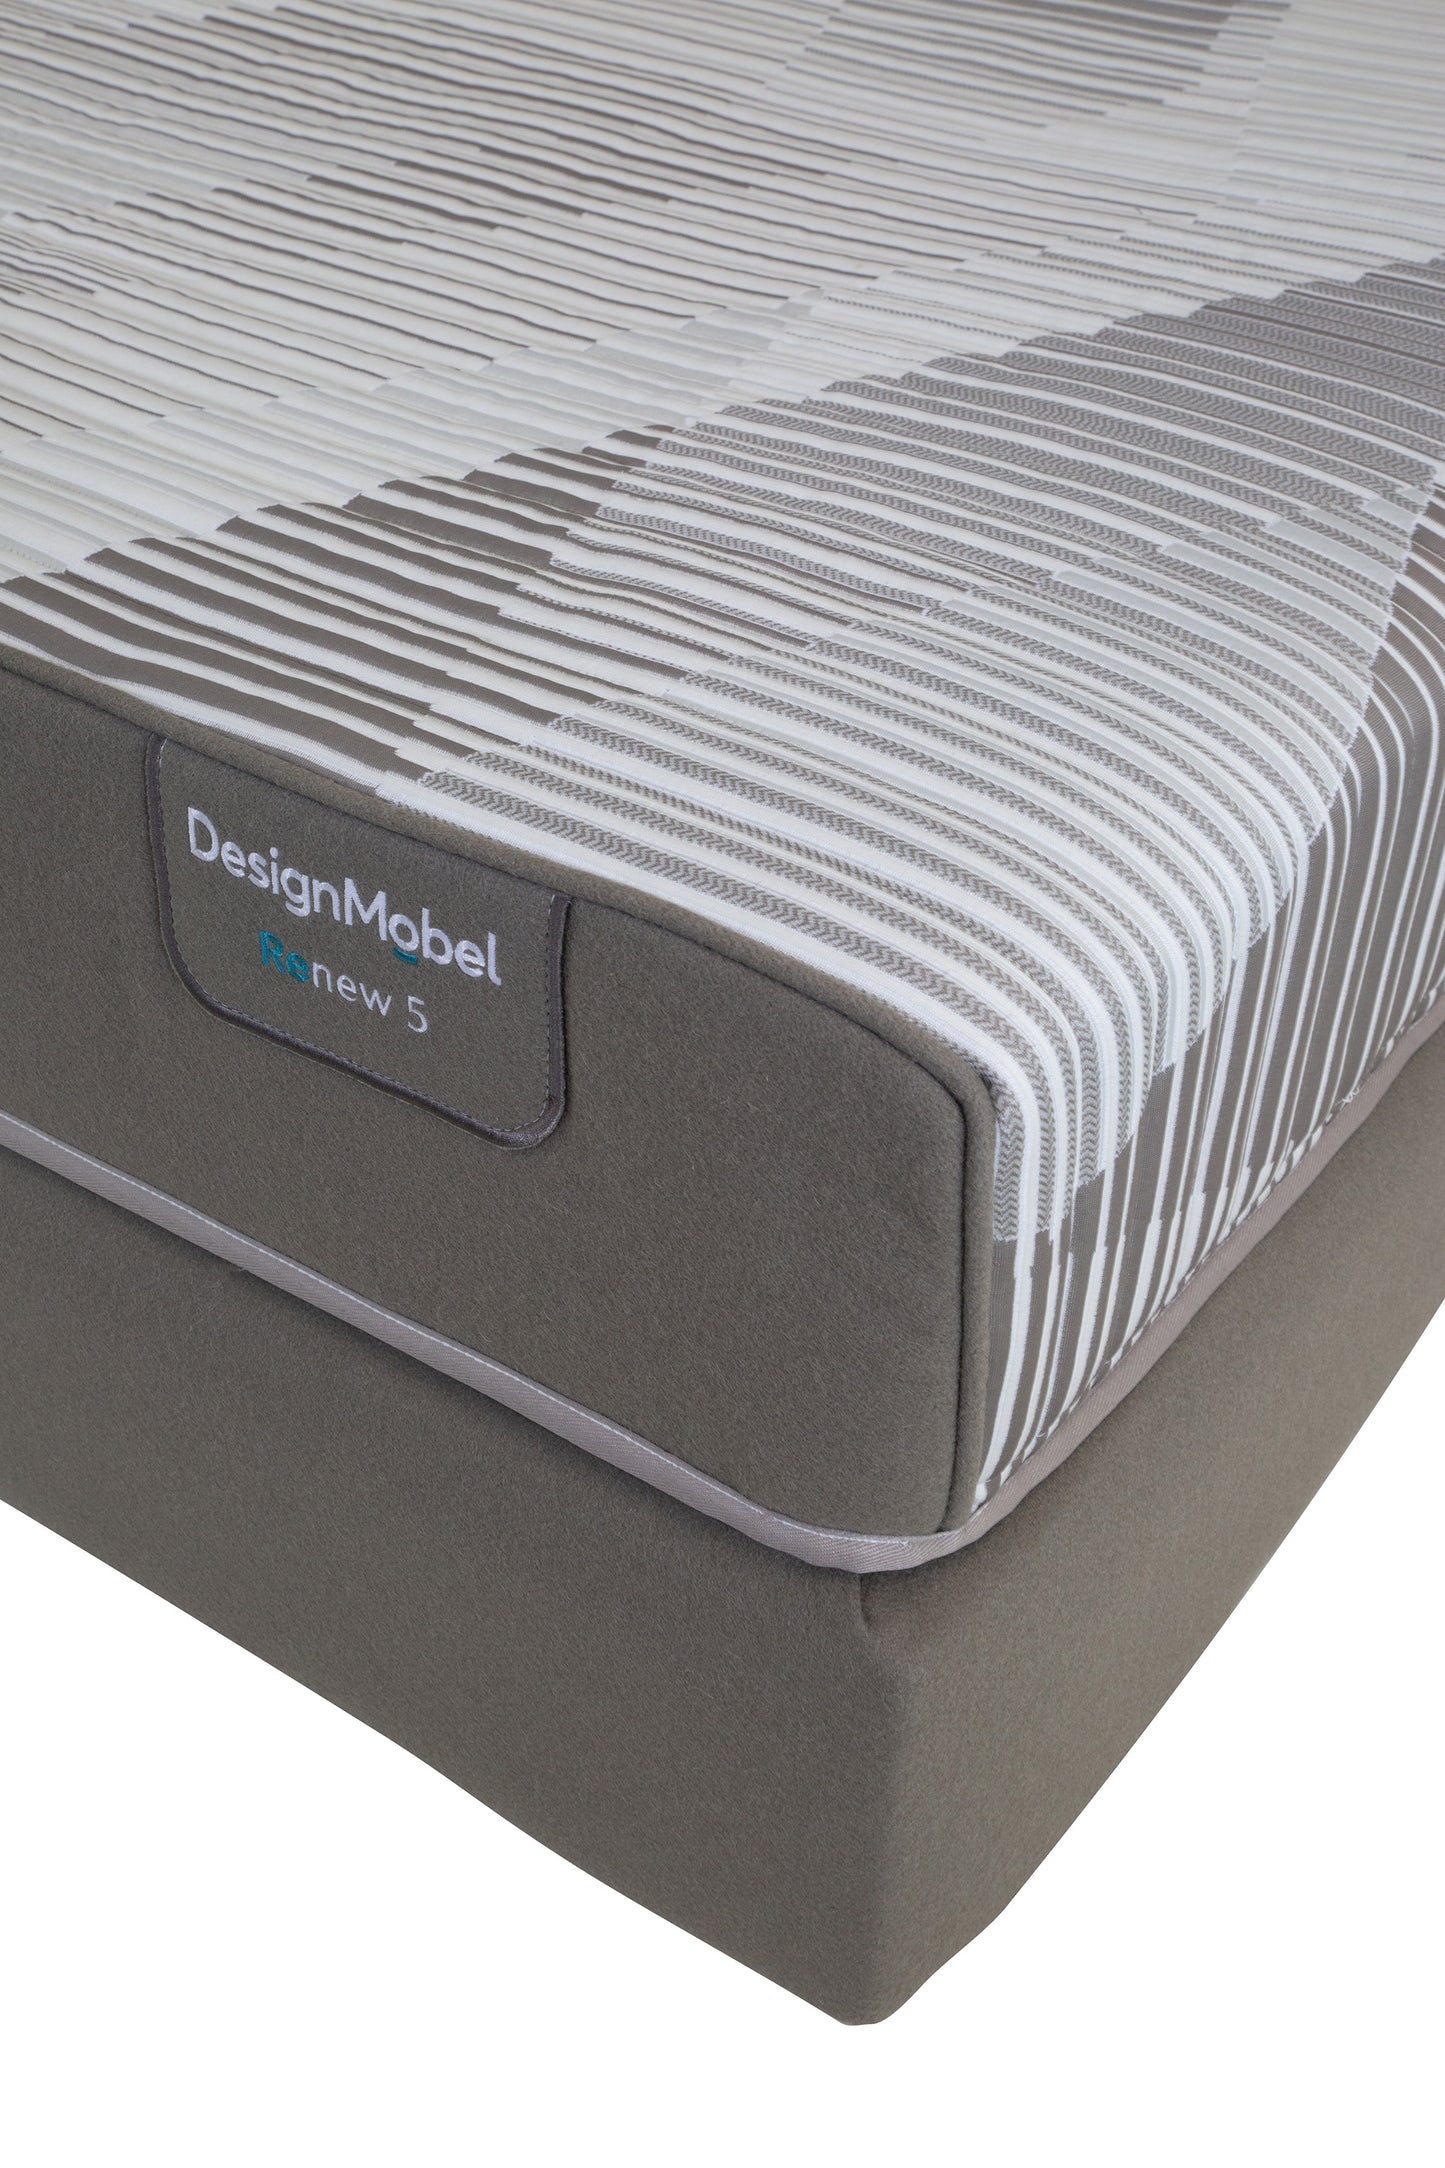 renew5-long-single-mattress-3